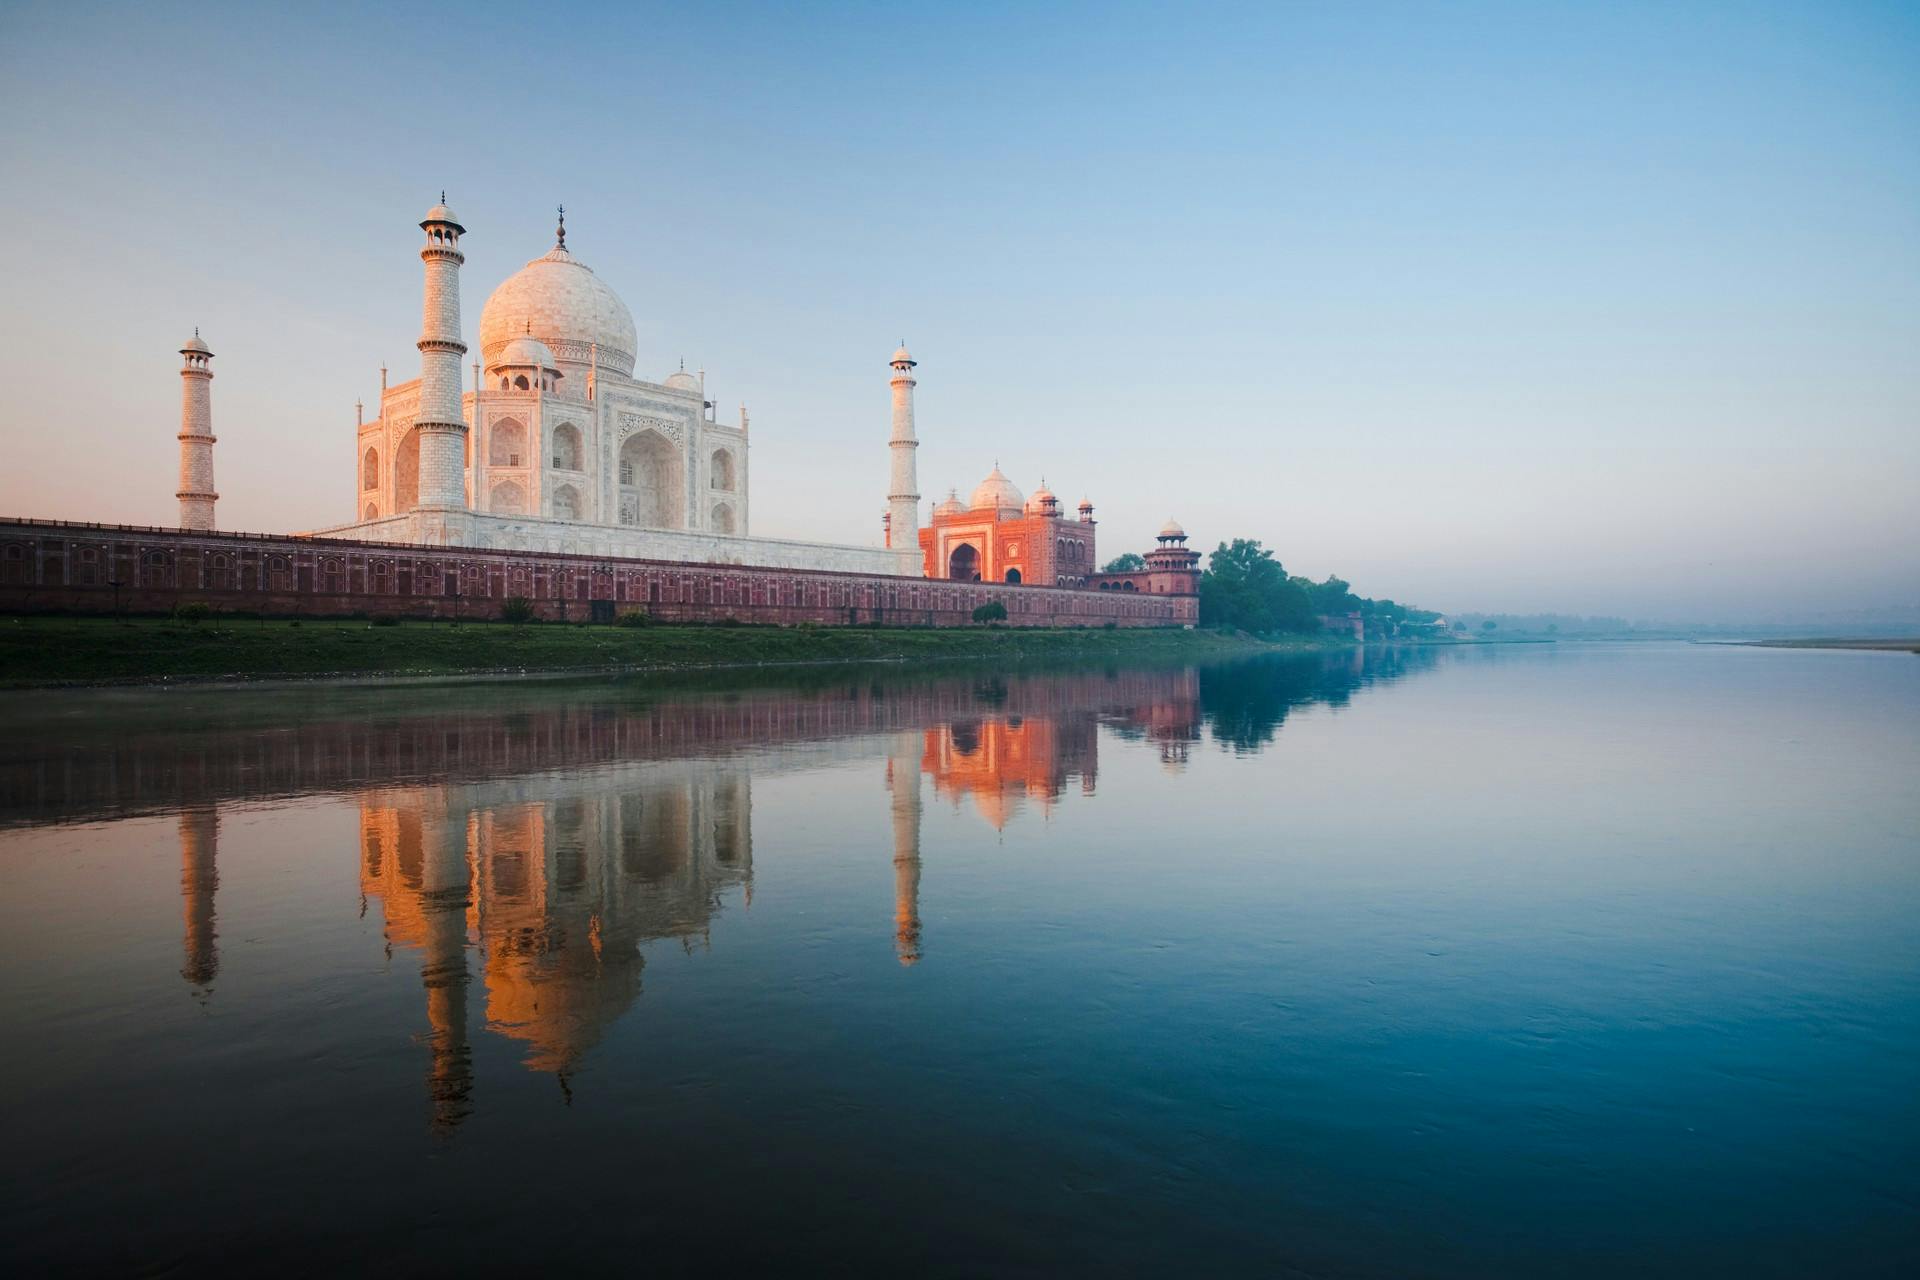 Taj Mahal from the river